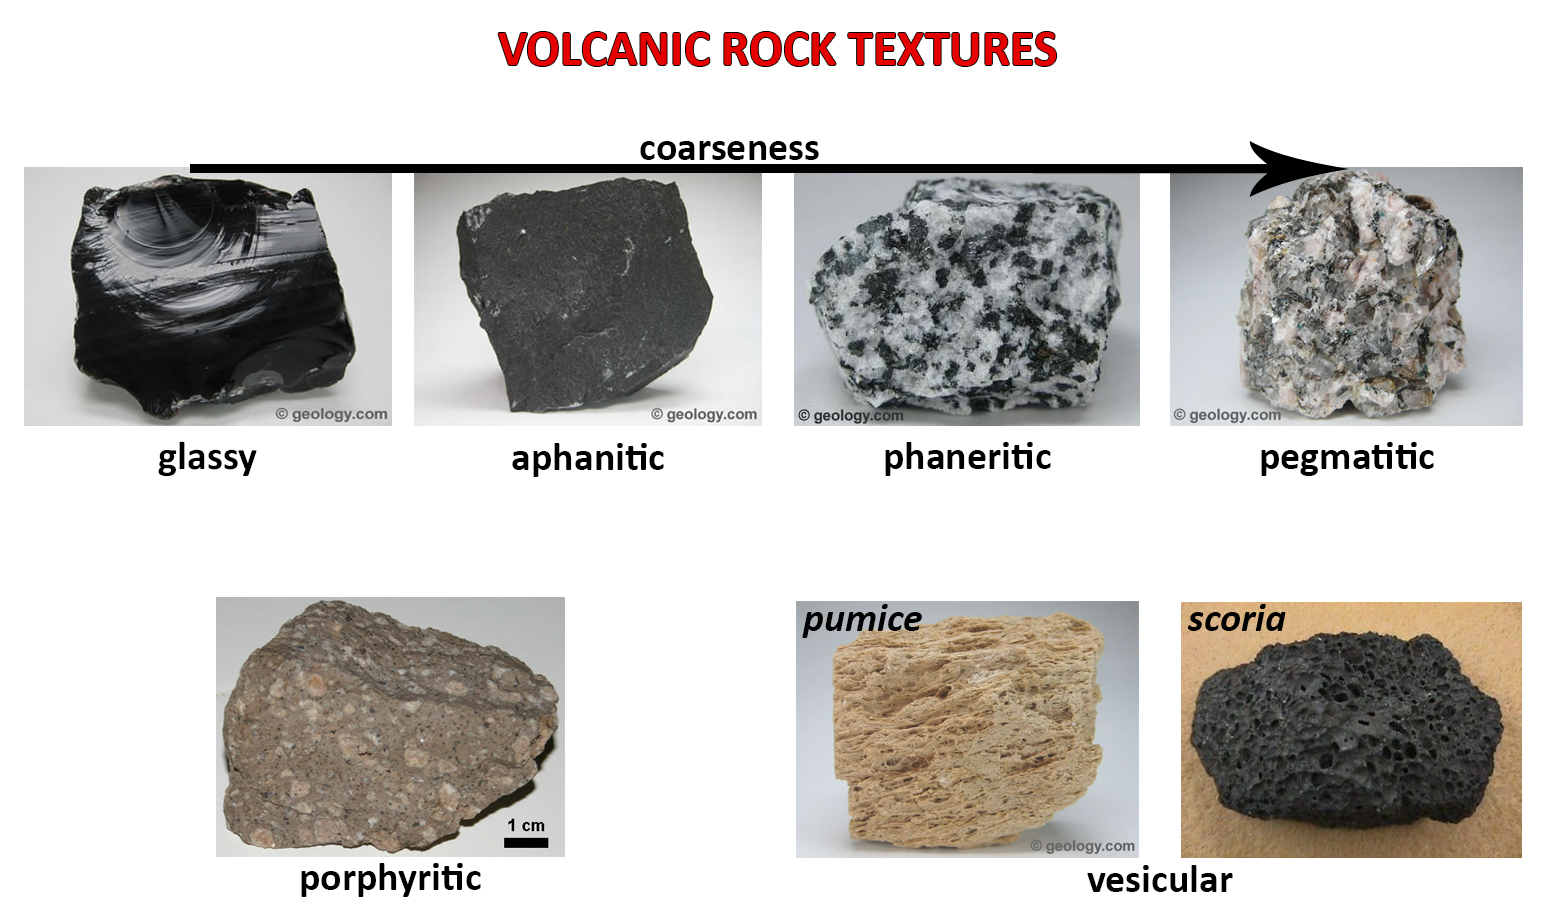 Where to buy volcanic rock